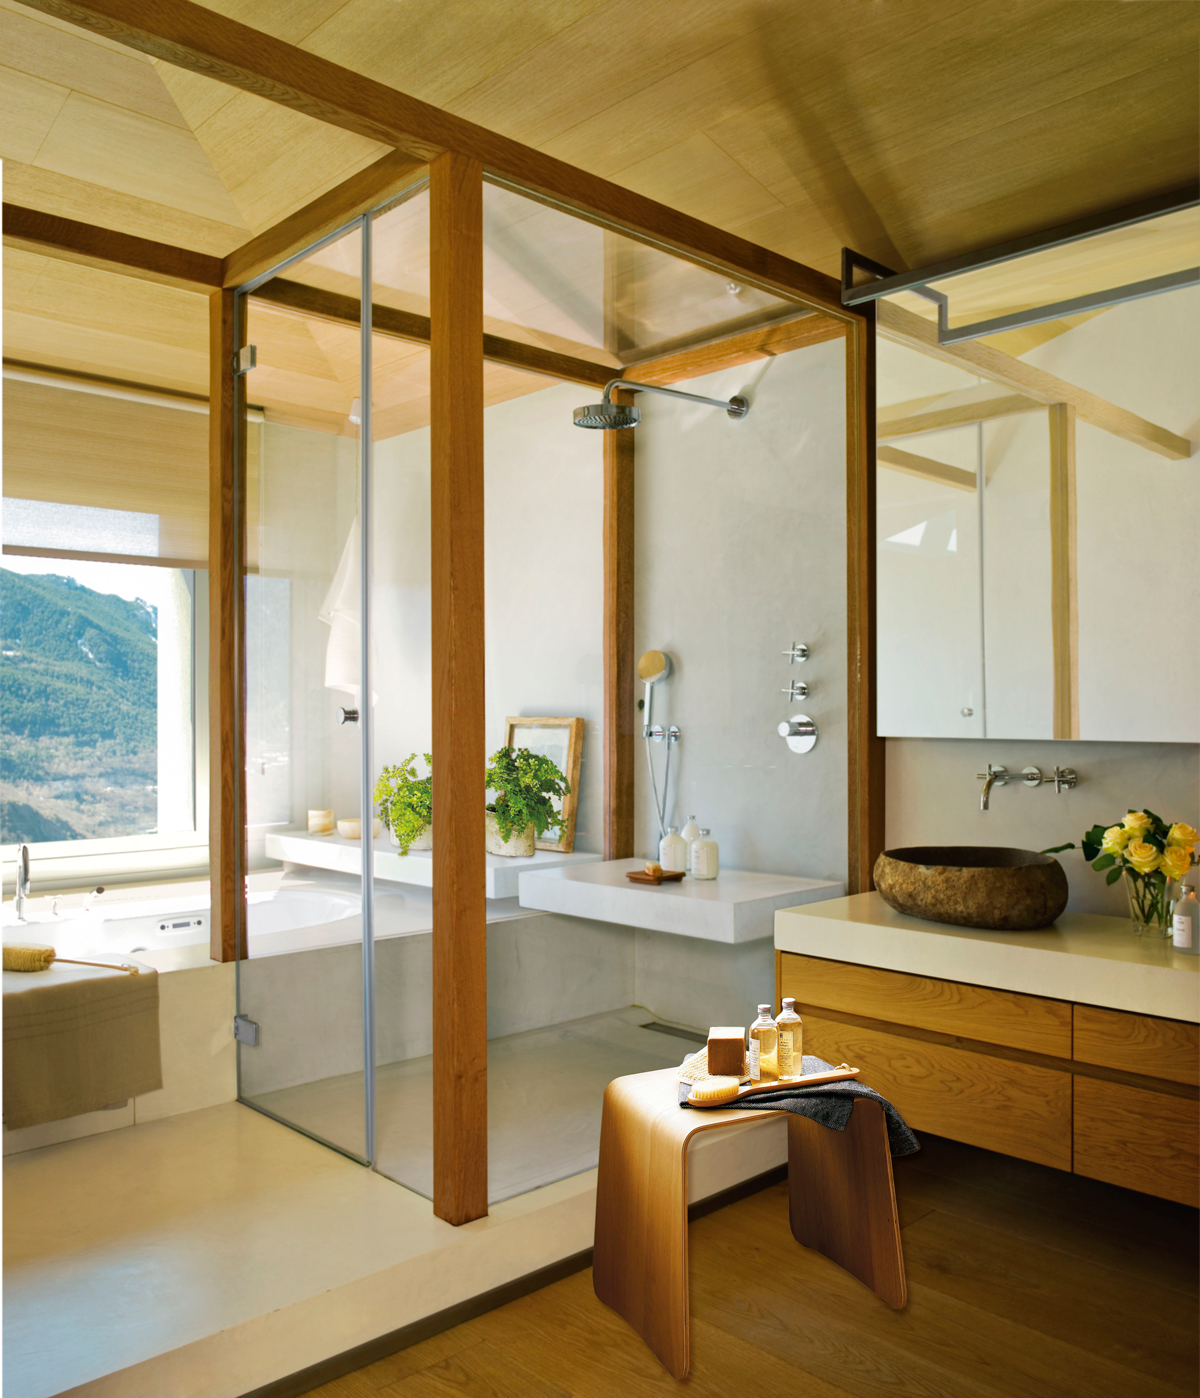 Baño con ducha central tipo cabina.